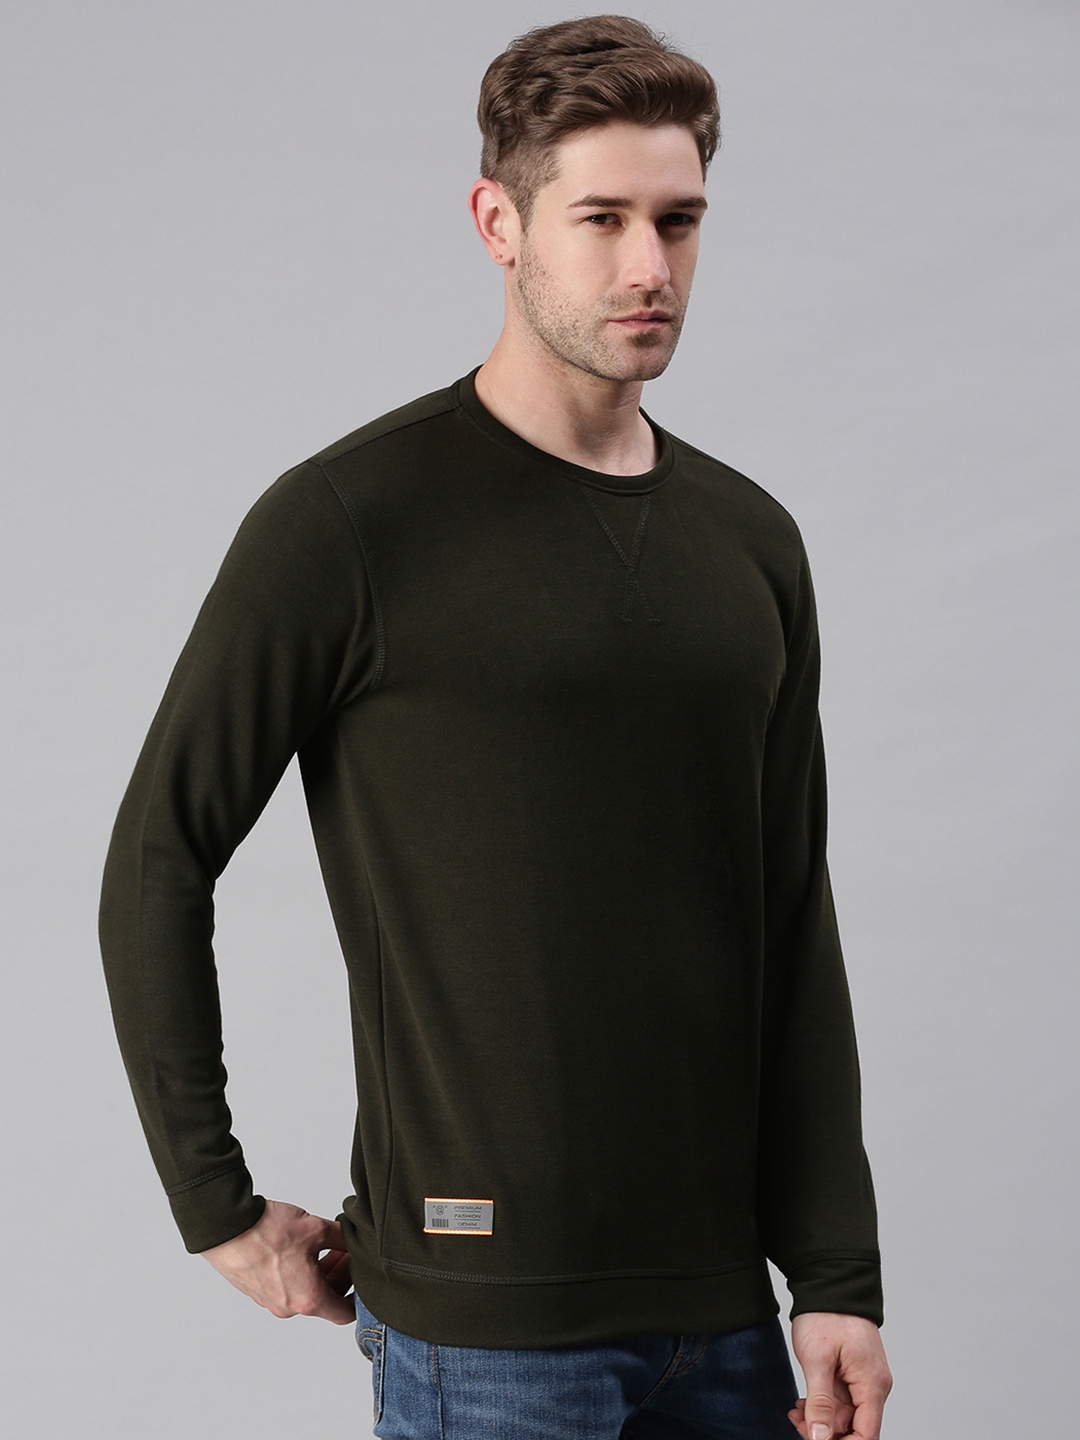 Men's Green Cotton Blend Solid Sweatshirts